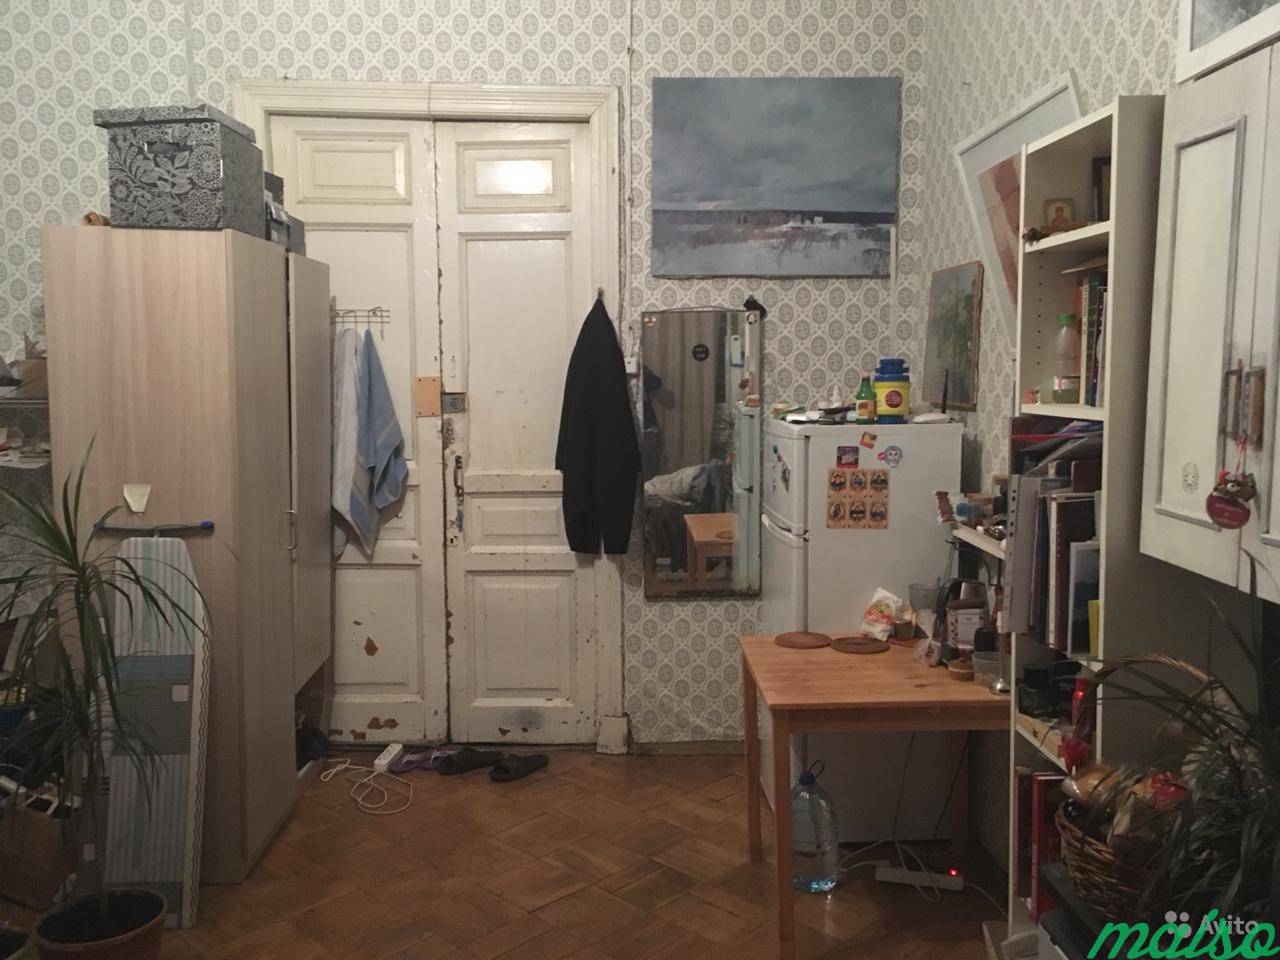 Комната 18 м² в 6-к, 3/5 эт. в Санкт-Петербурге. Фото 2